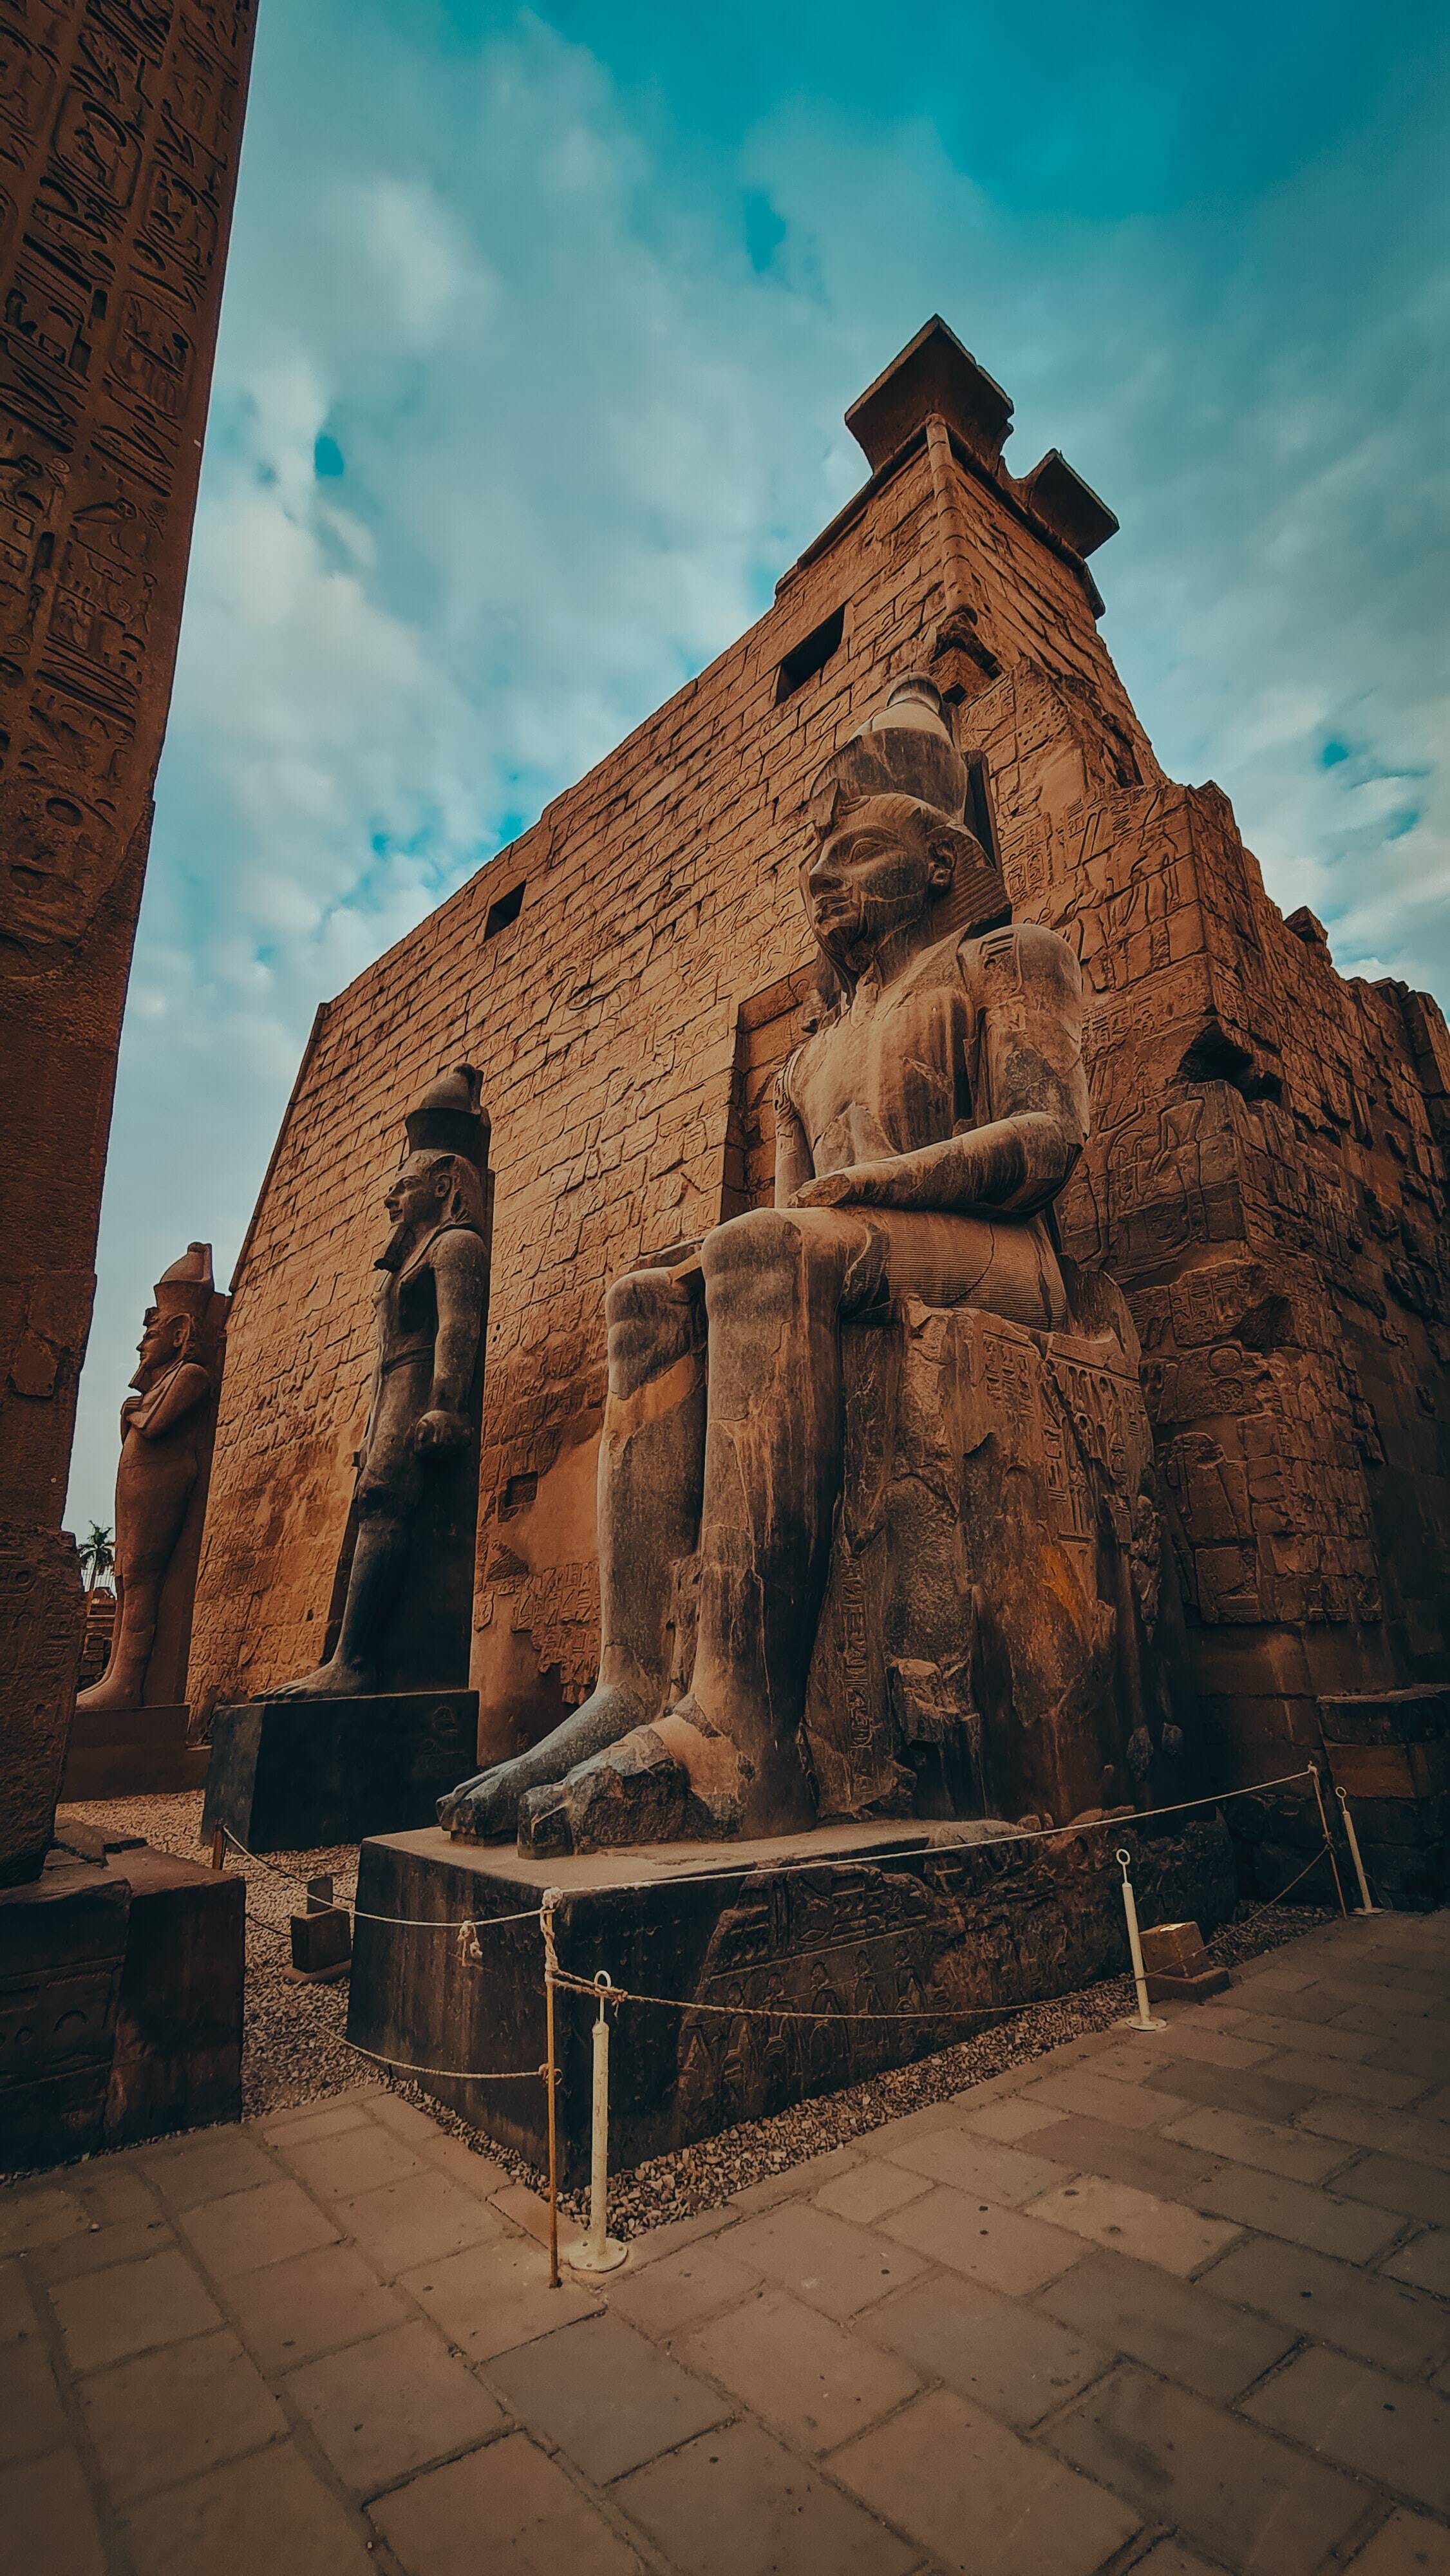 Egito. Foto: ahmed shabana / unsplash